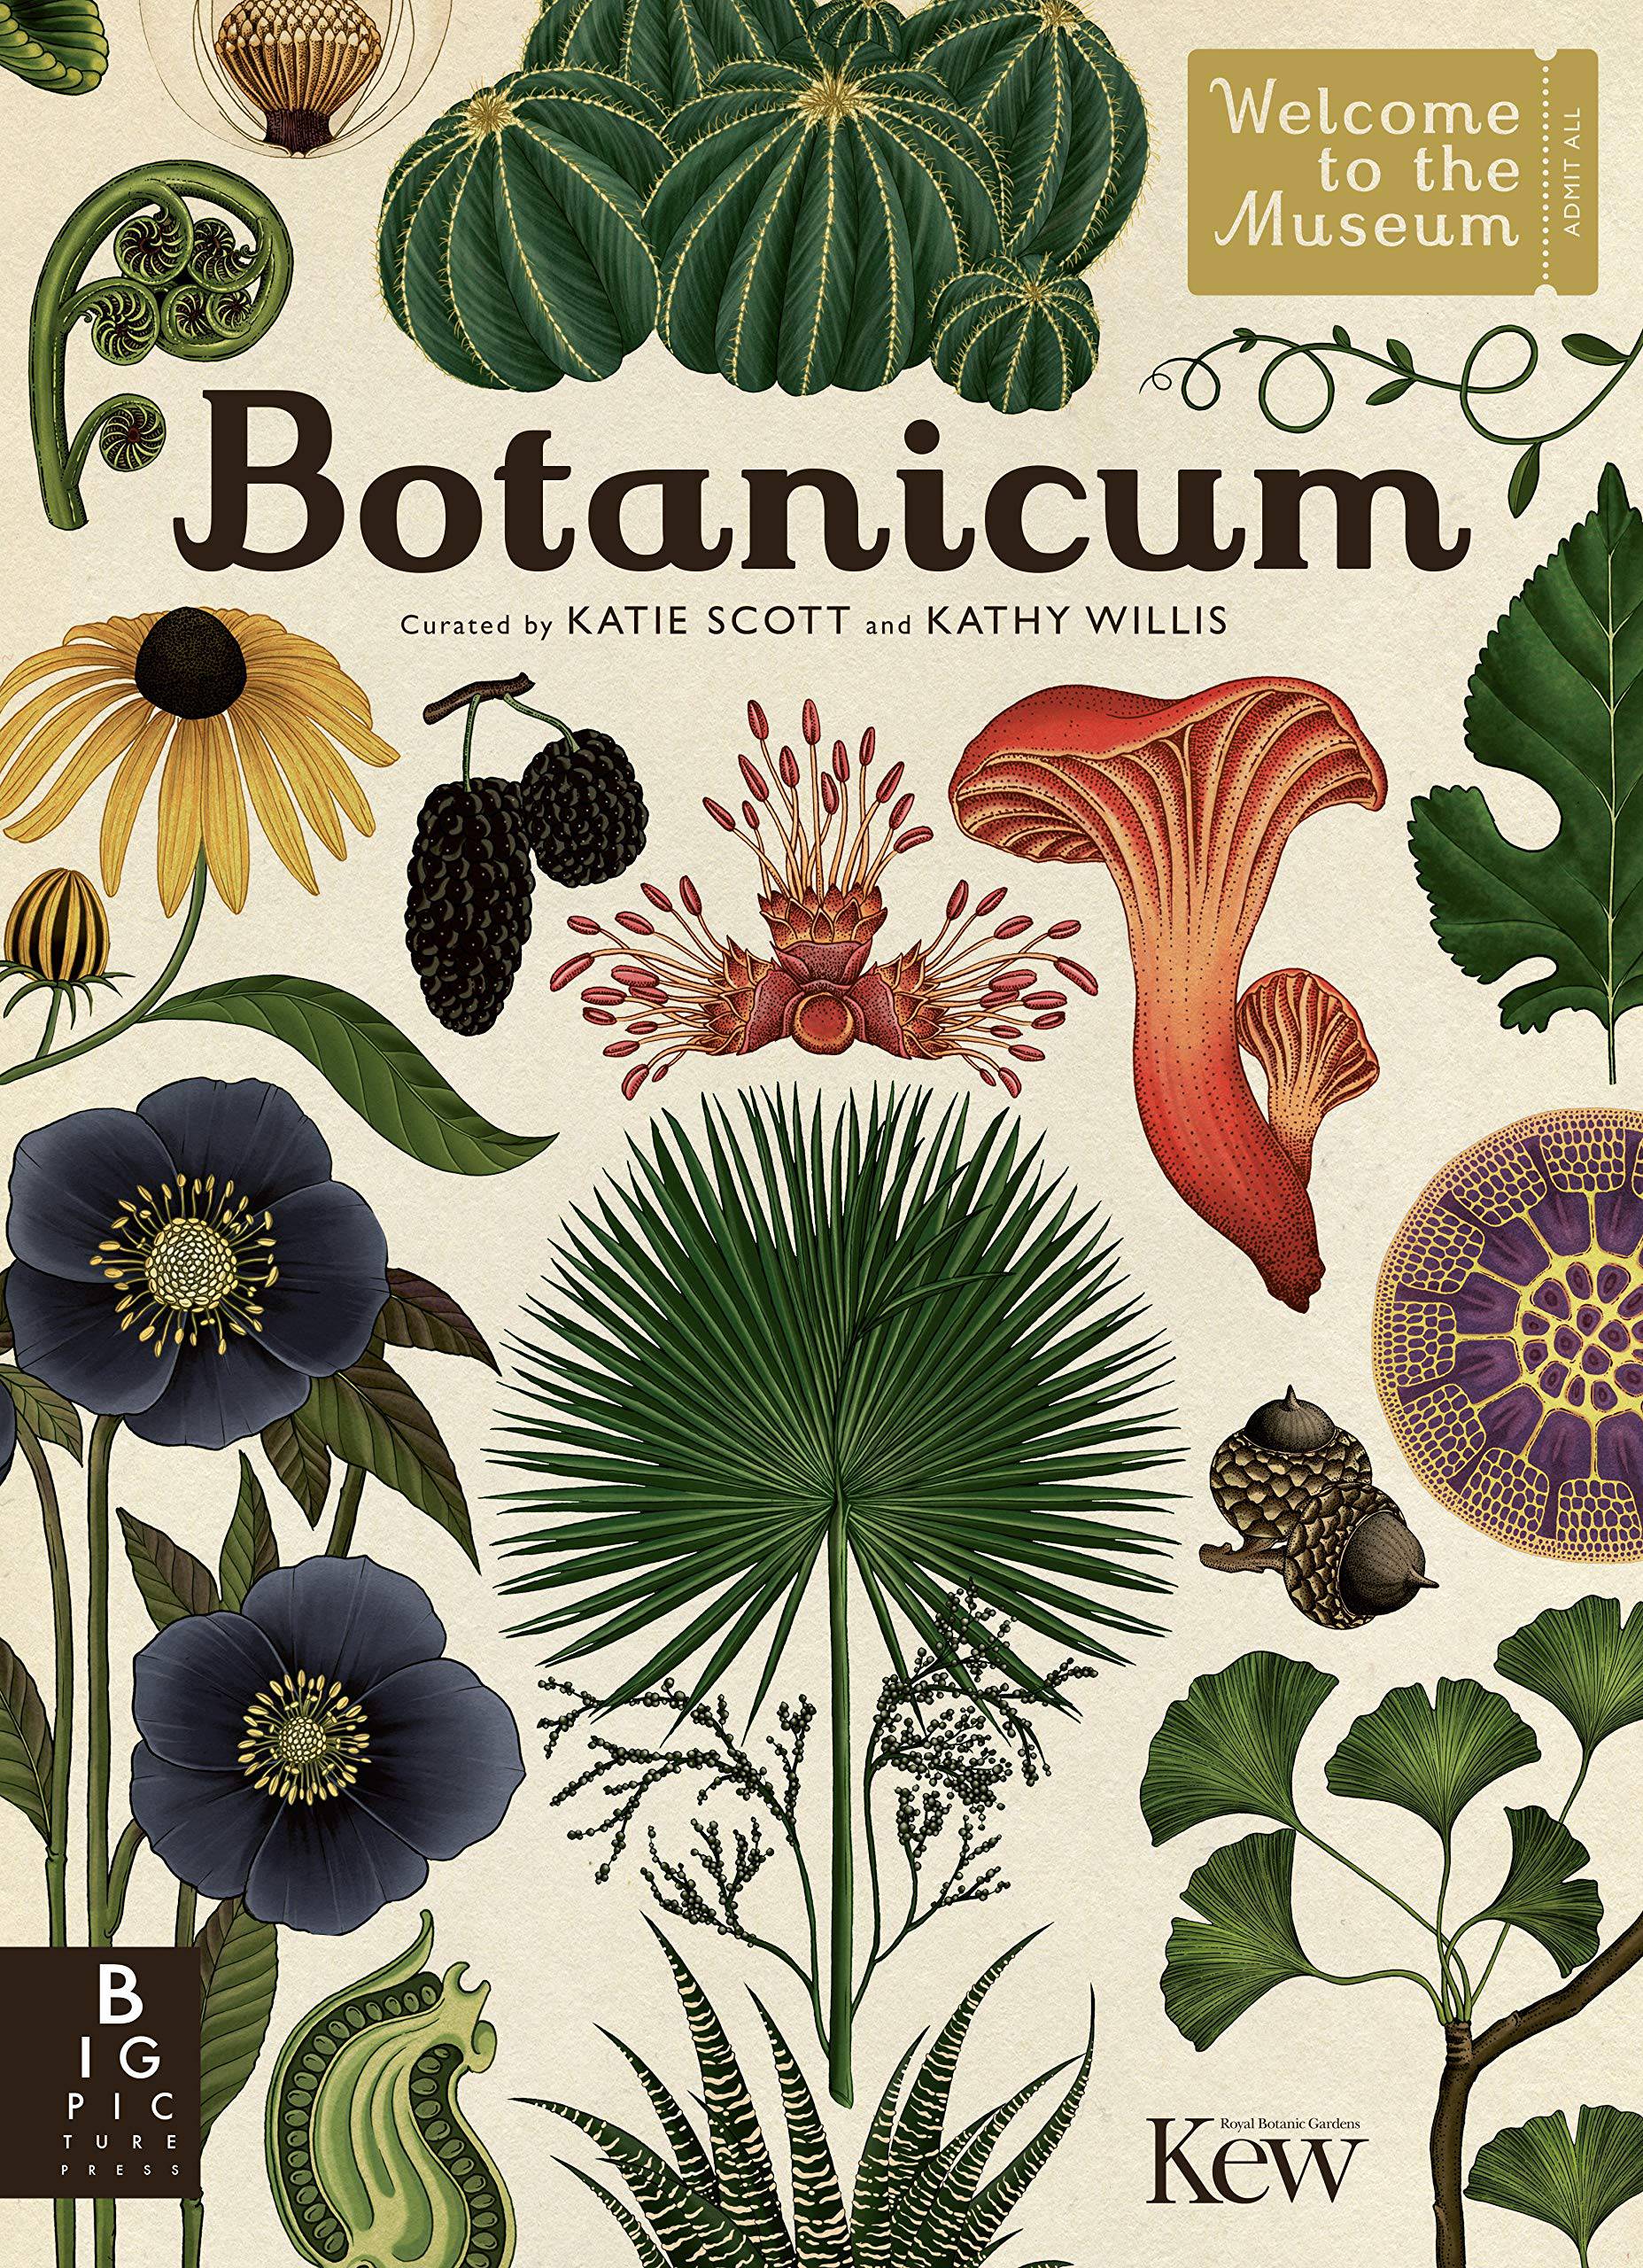 Botanicum by Katie Scott and Kathy Willis